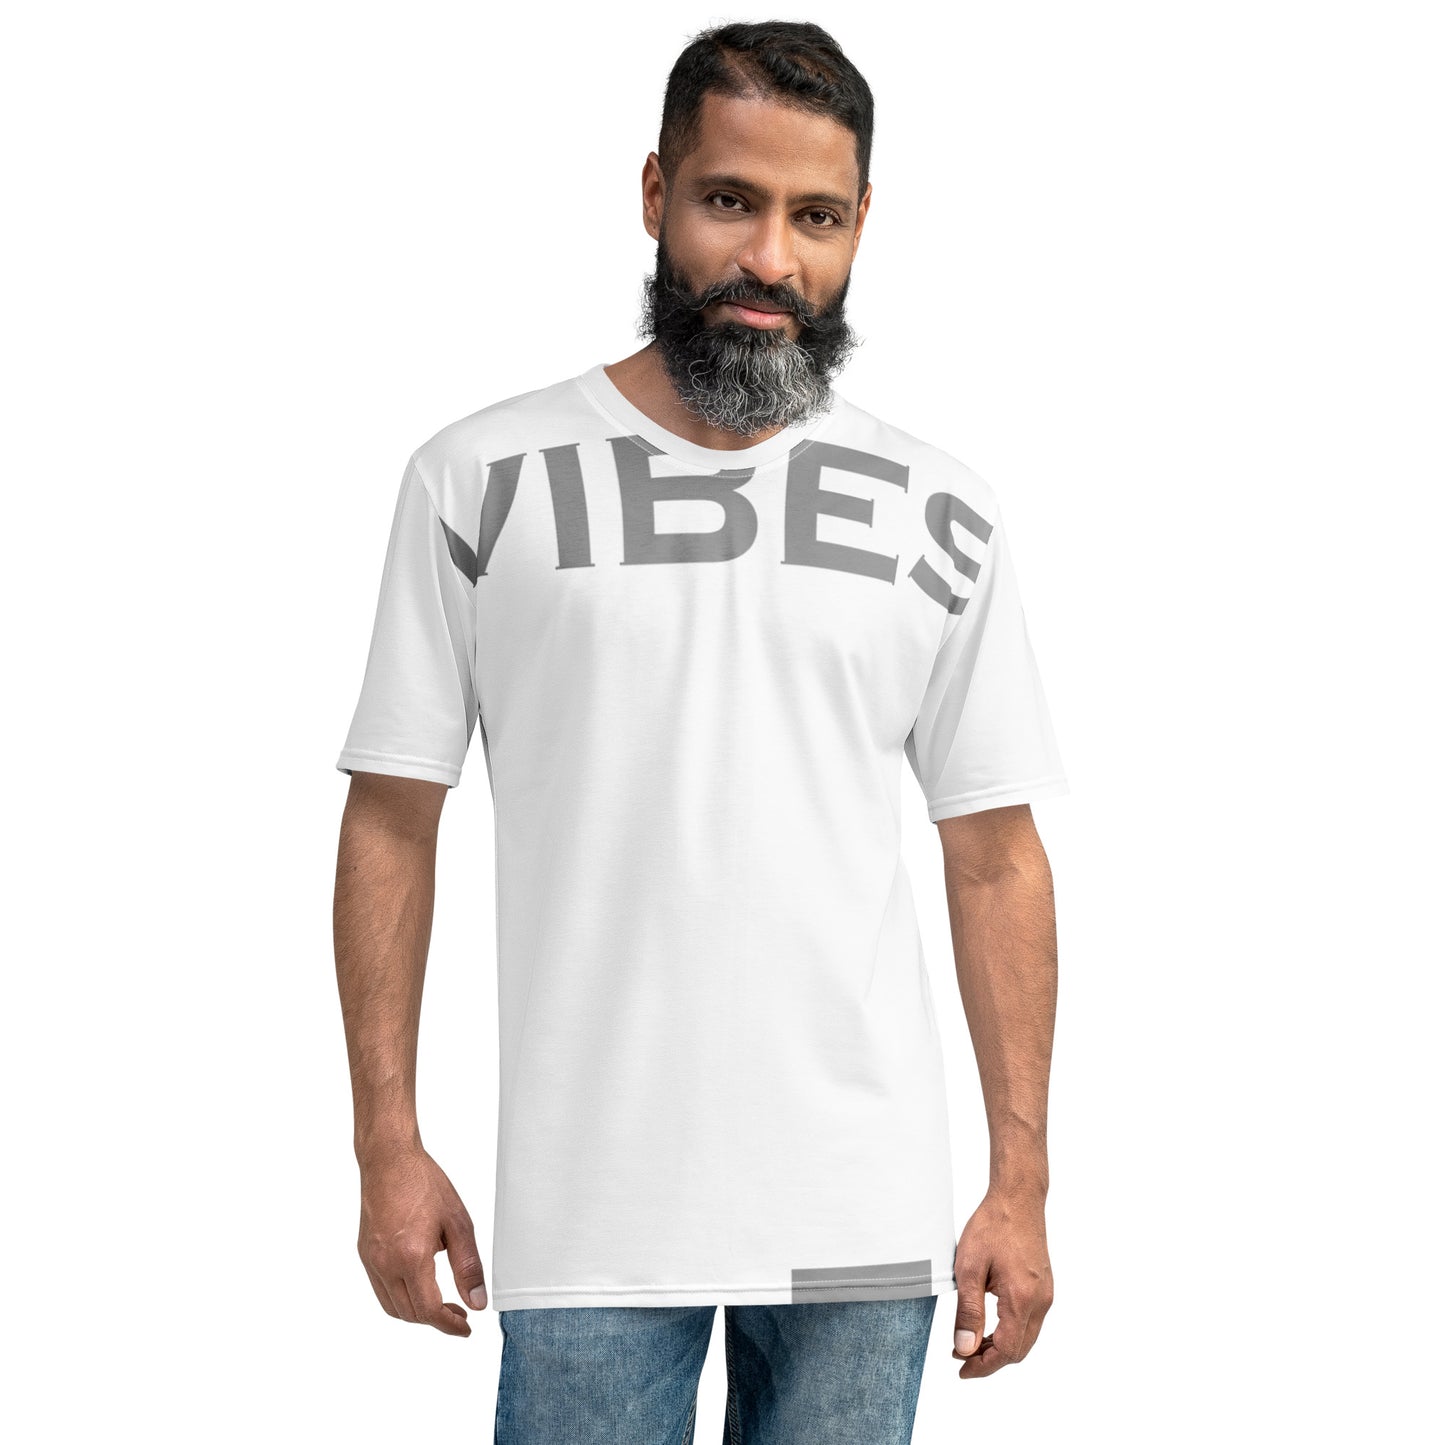 TIME OF VIBES - Premium Men's T-Shirt VIBES (White/Nobel) - €49.00